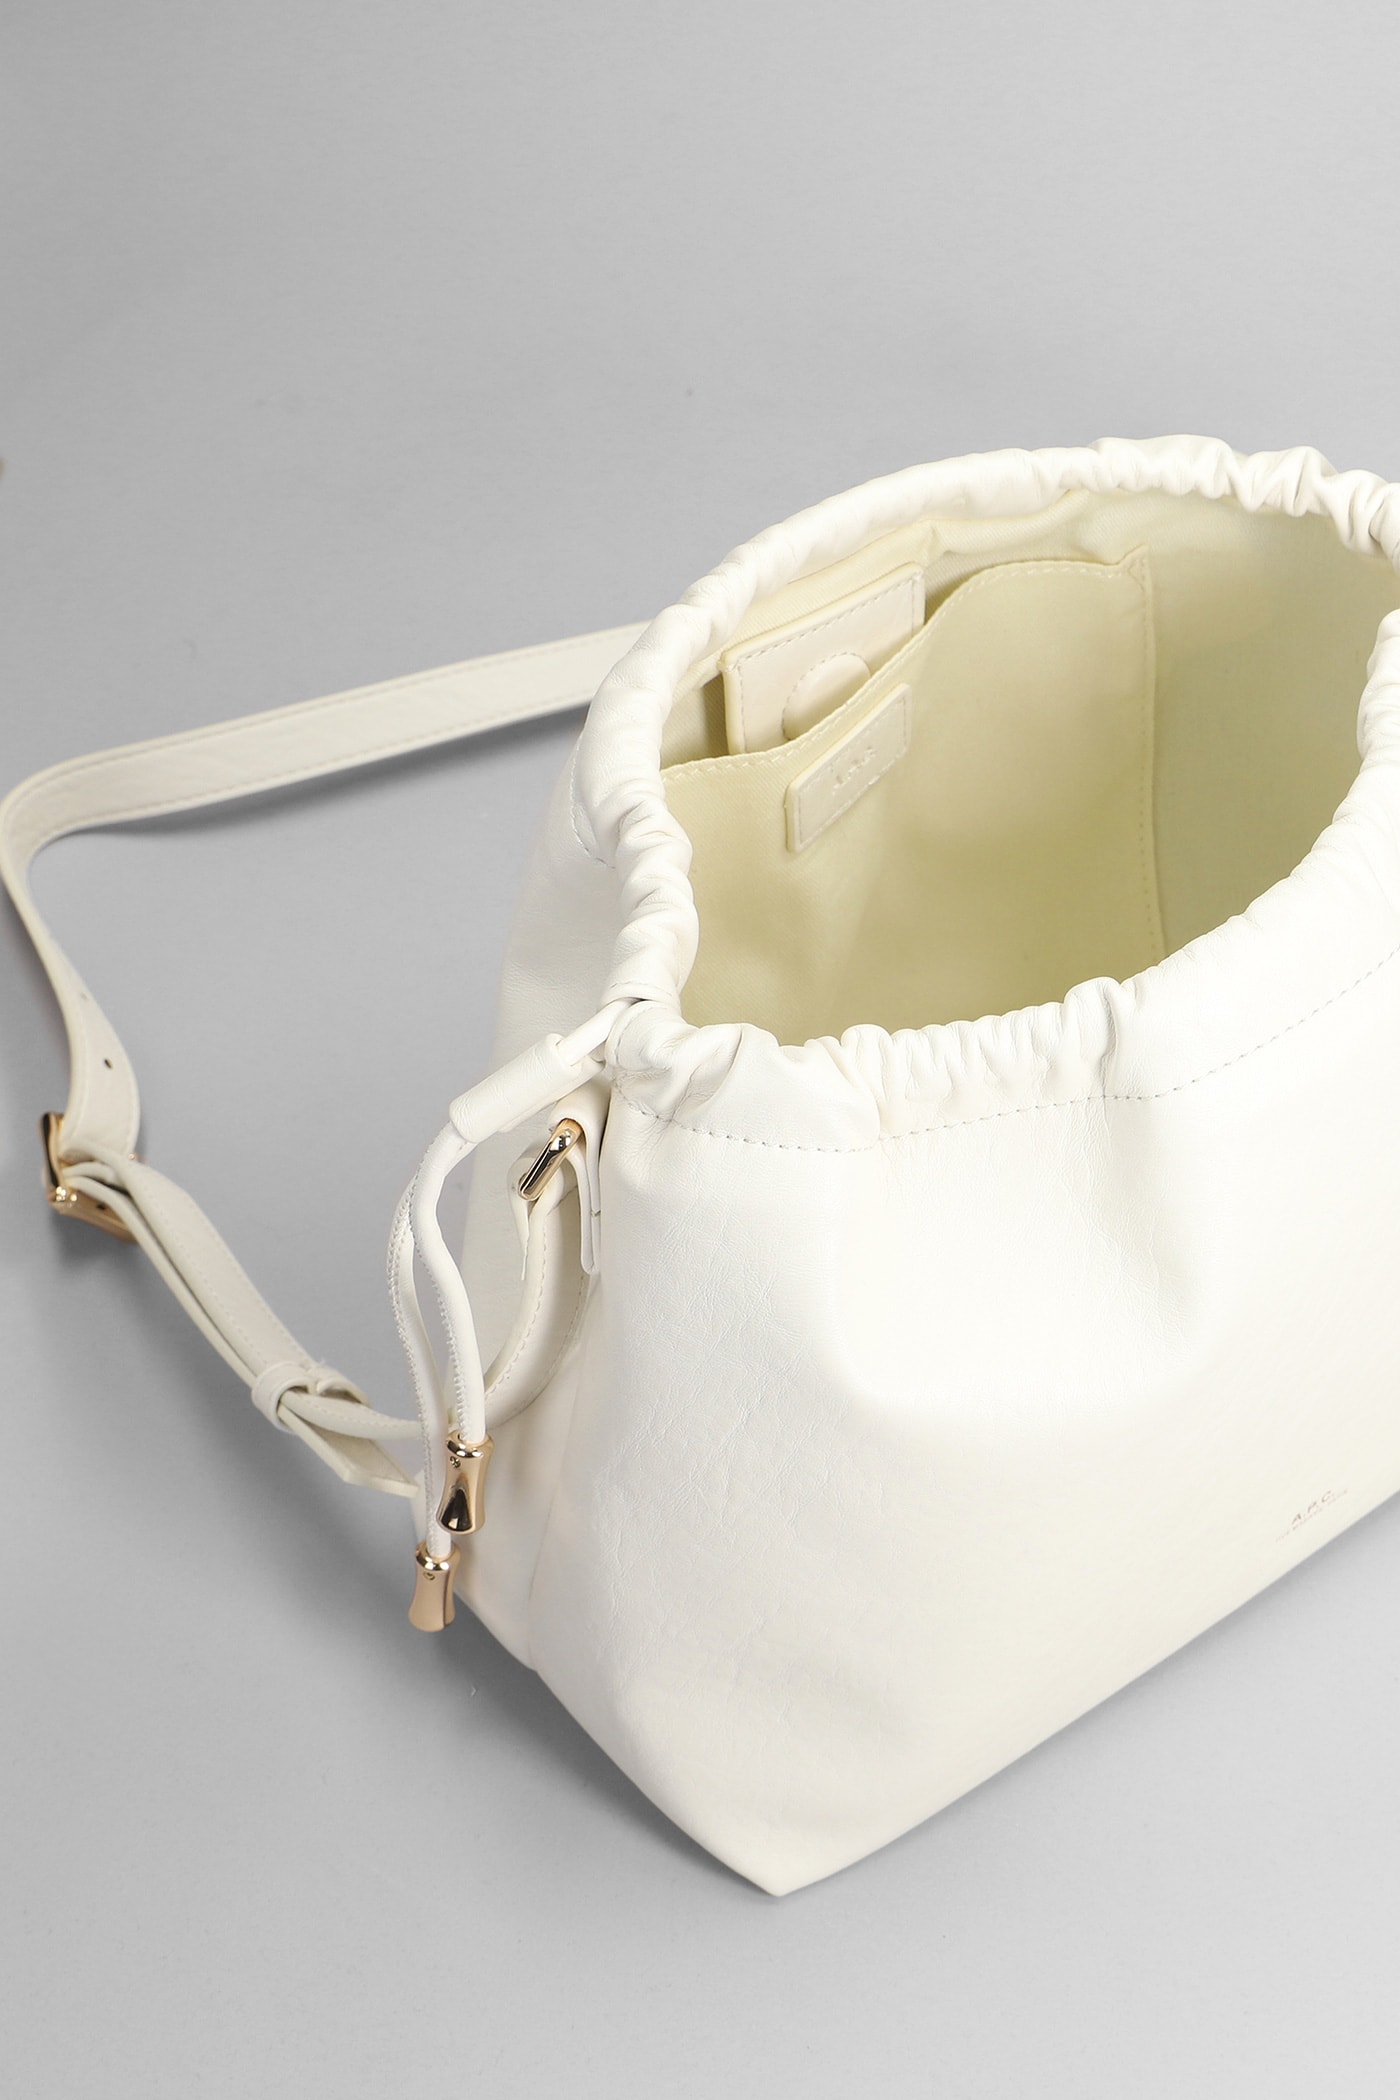 Shop Apc Ninon Shoulder Bag In White Polyuretan